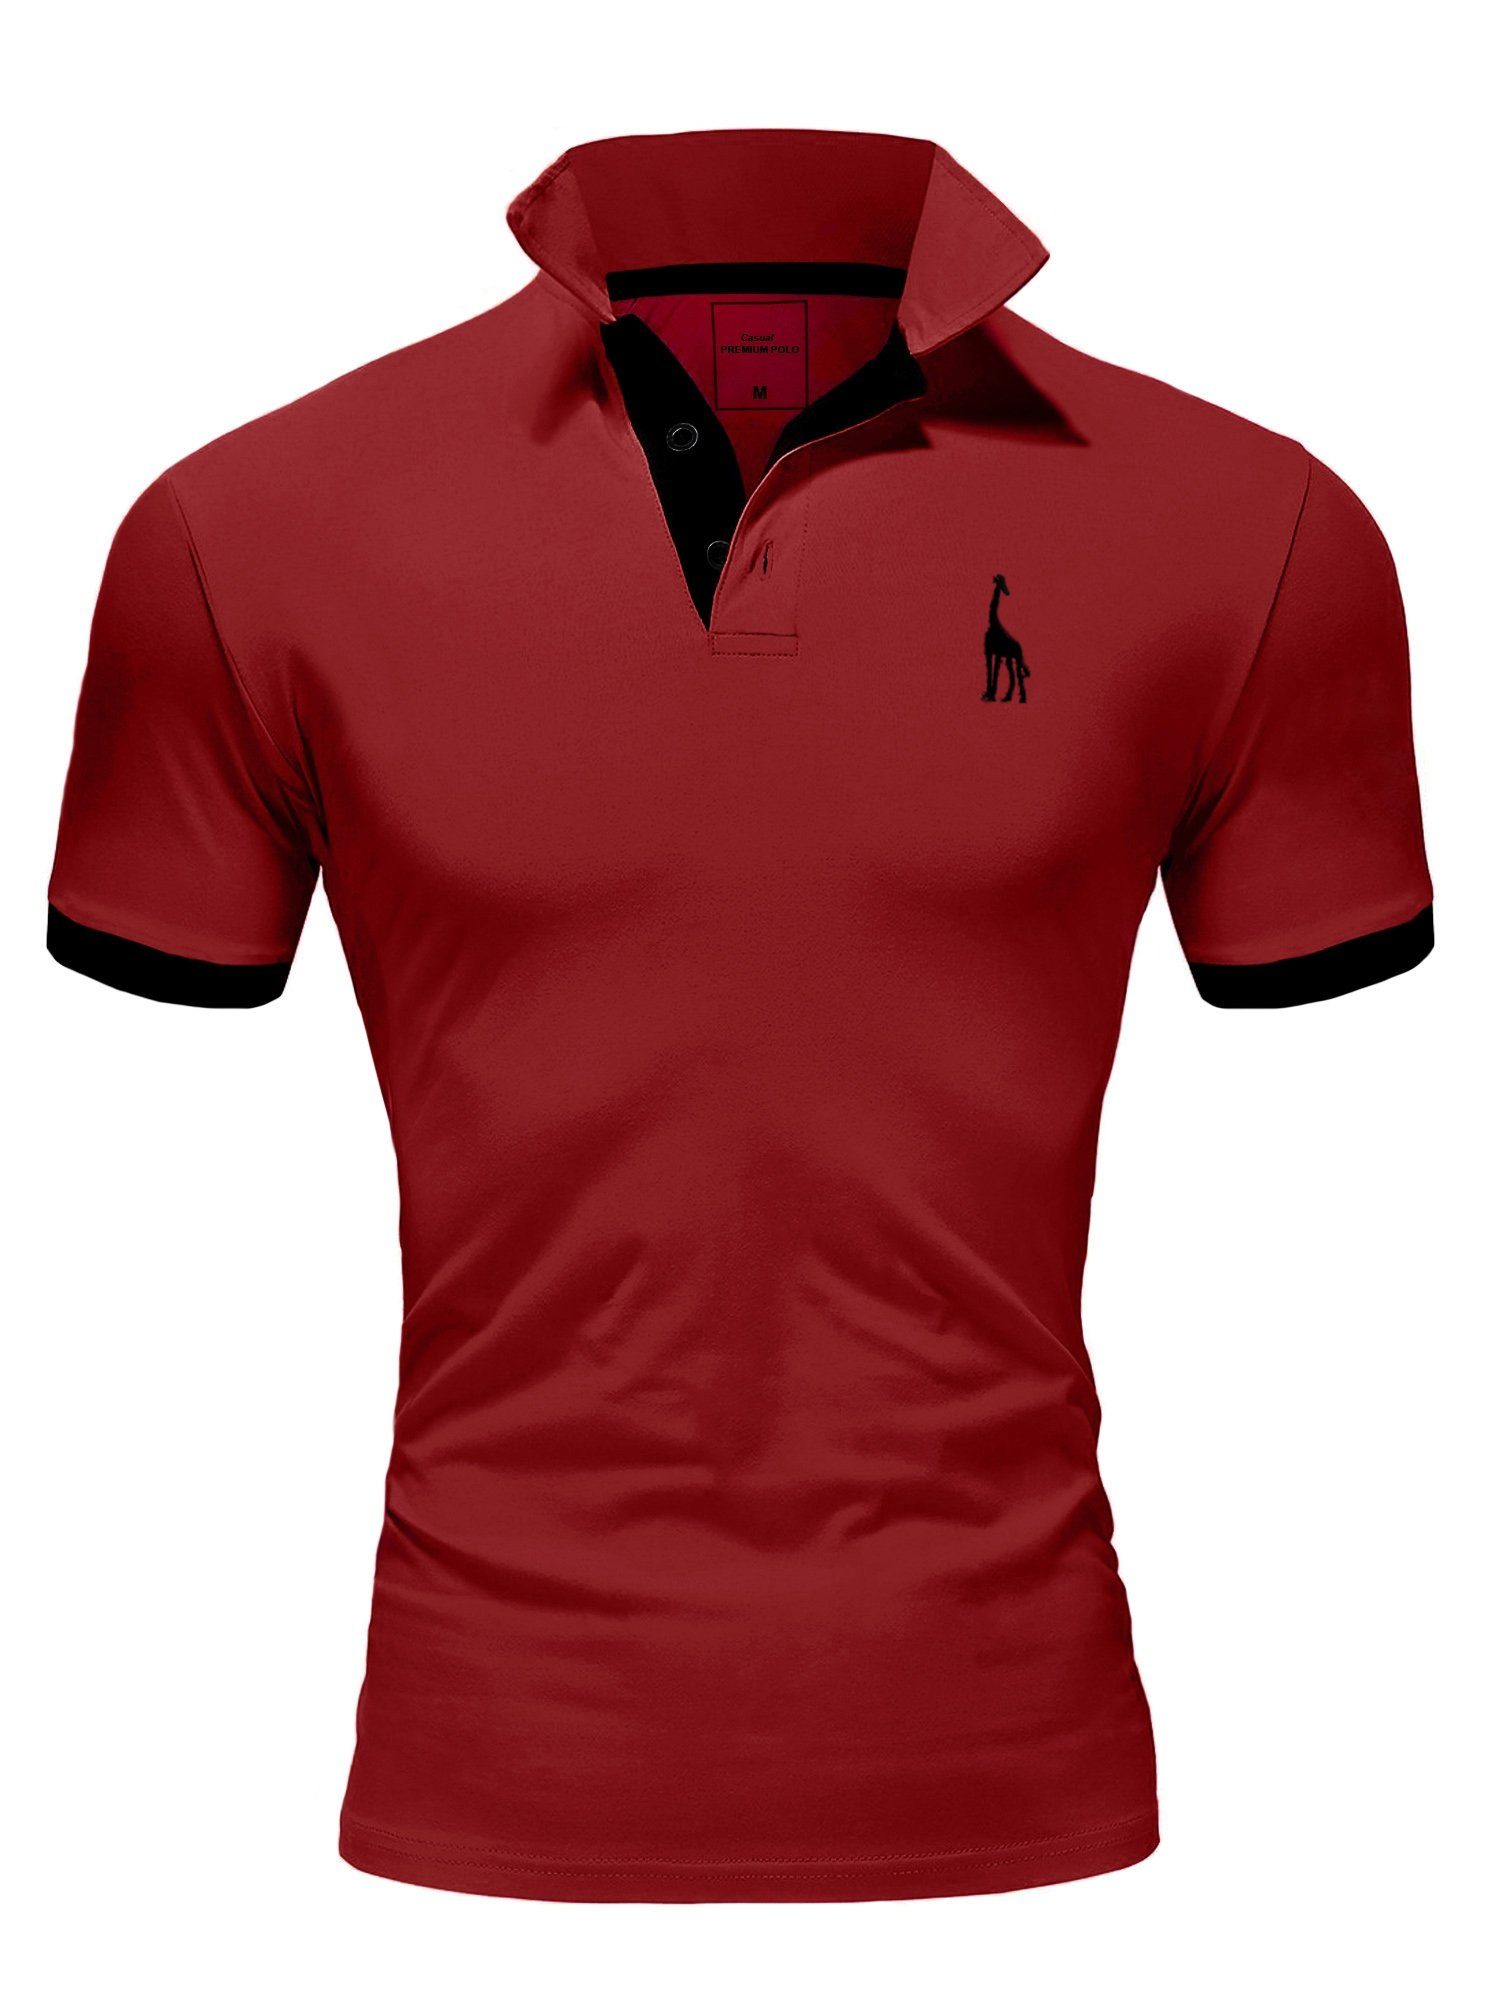 Polo Herren Poloshirt Bordeaux/Schwarz Hemd Kontrast JOSEPH Basic REPUBLIX Kurzarm